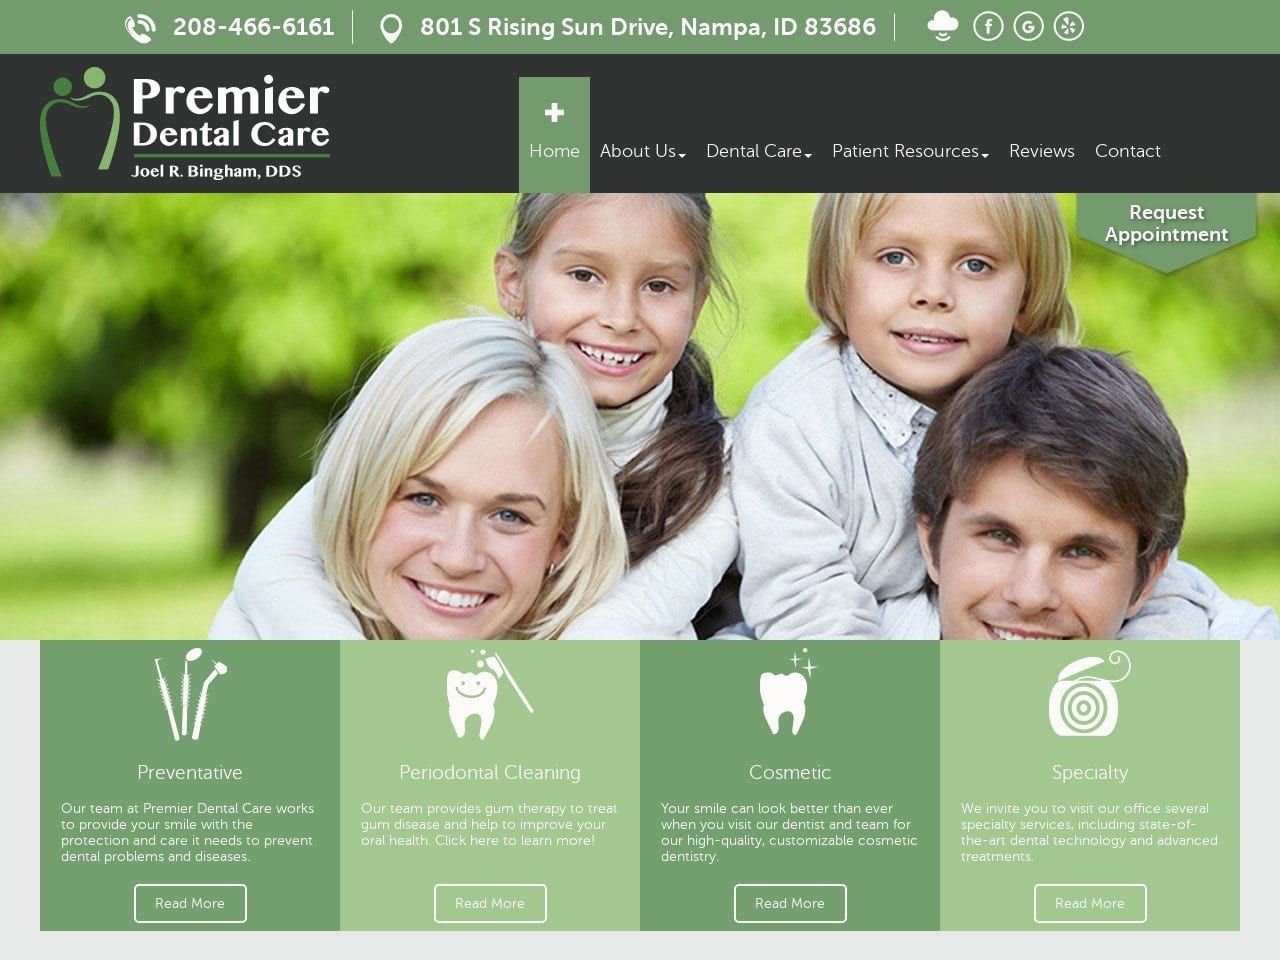 Premier Dental Care Website Screenshot from smilesofnampa.com